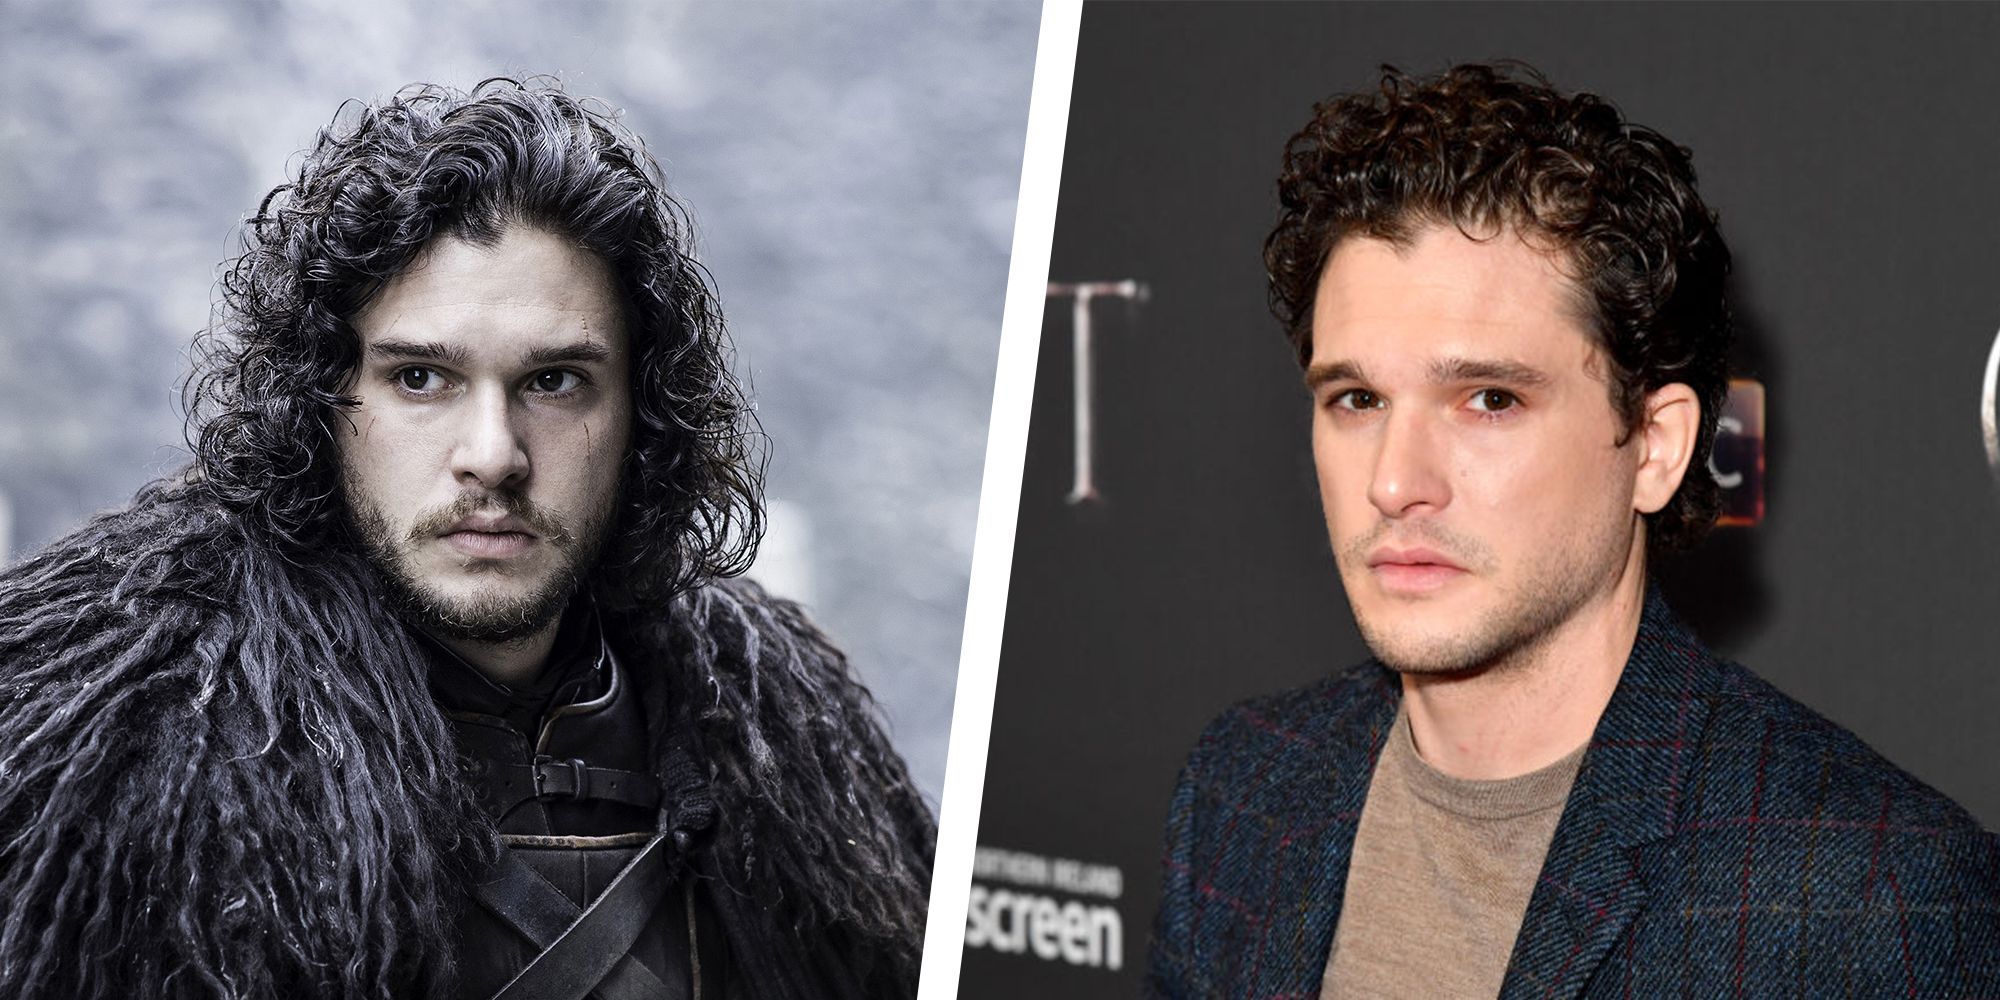 Jon Snow GOT Hair Evolution From Bun To Finale Curls